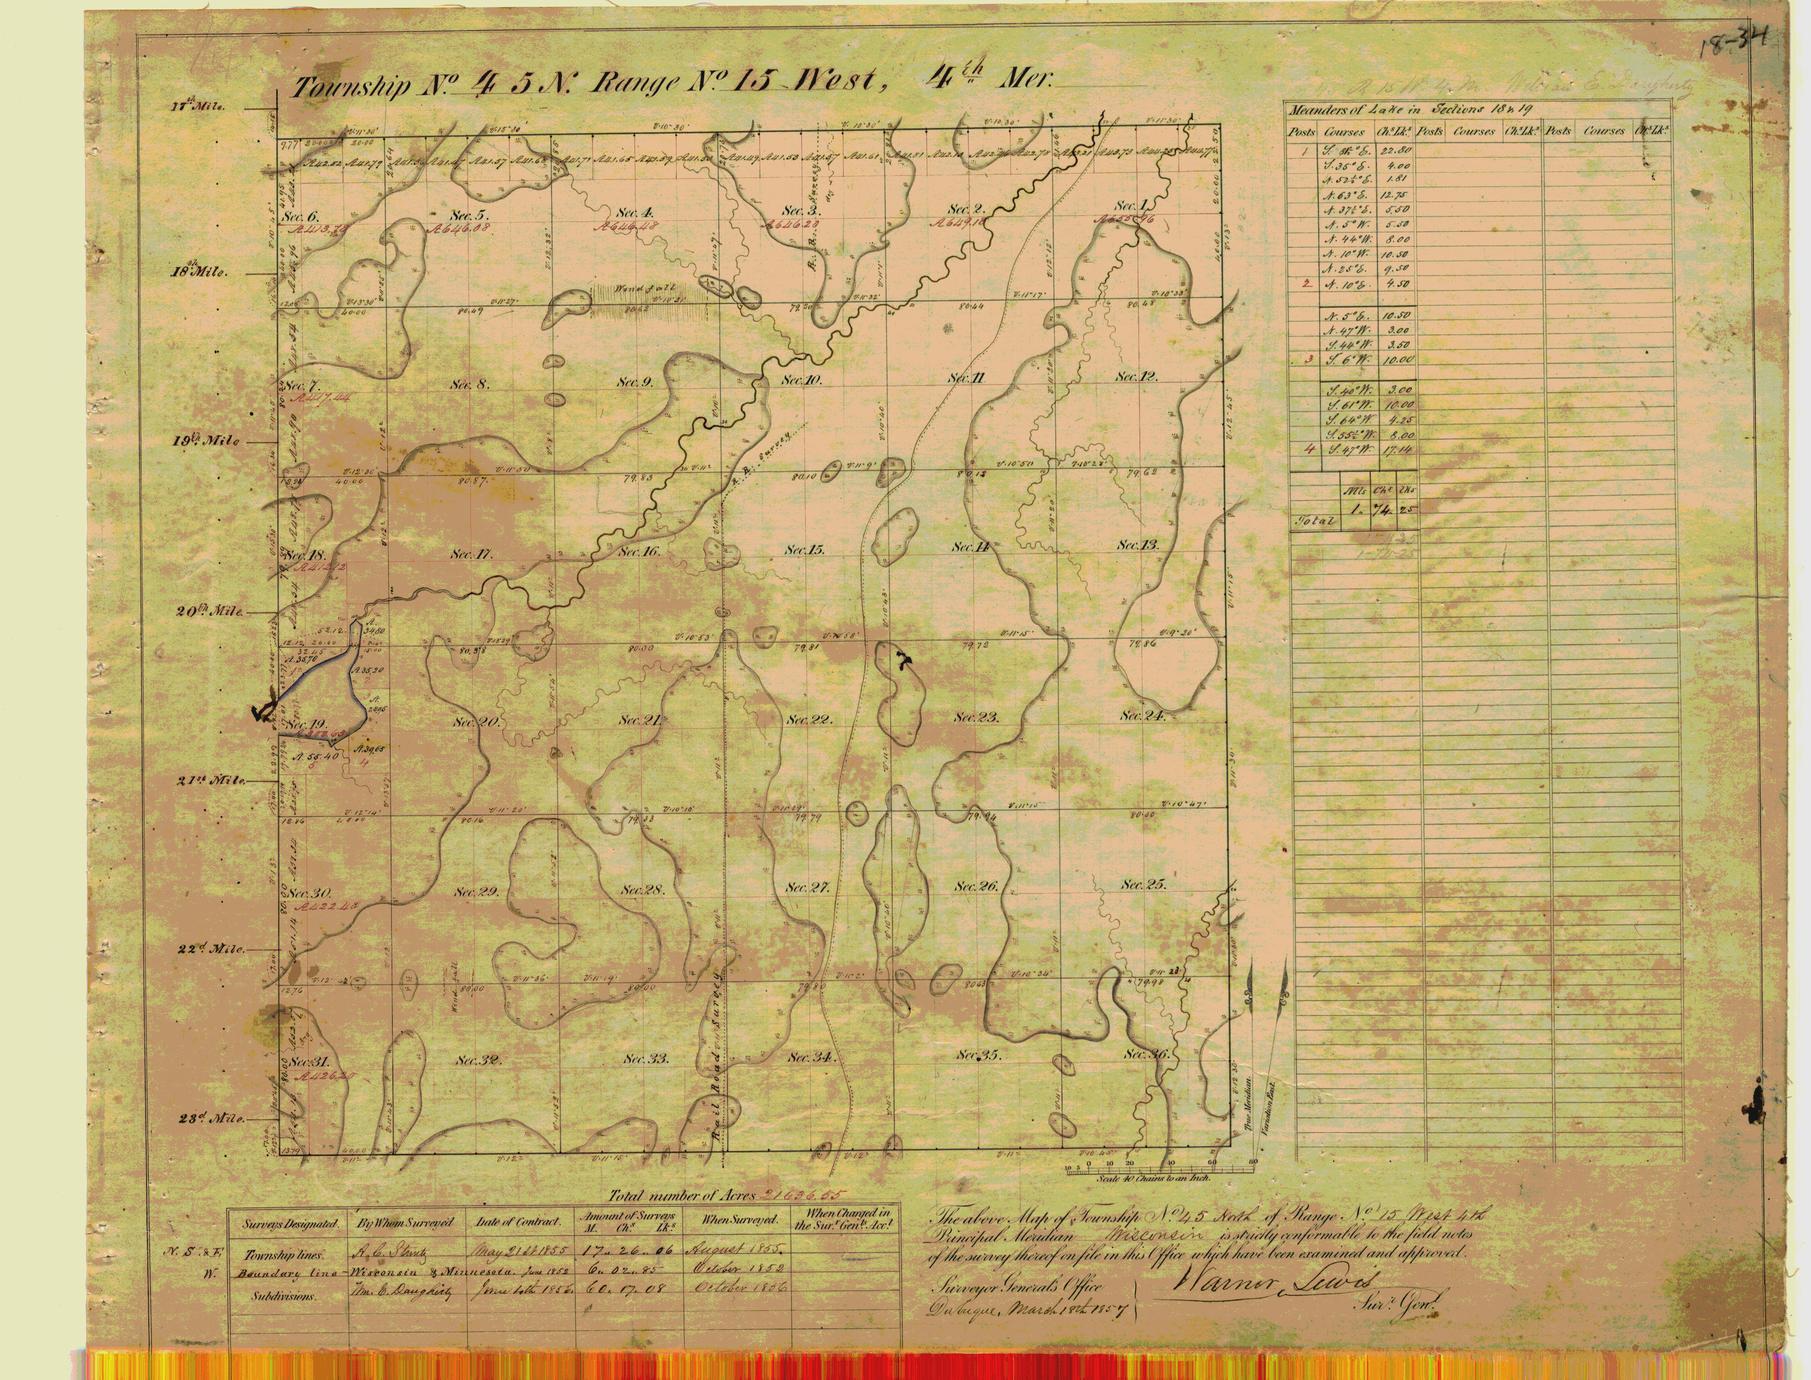 [Public Land Survey System map: Wisconsin Township 45 North, Range 15 West]